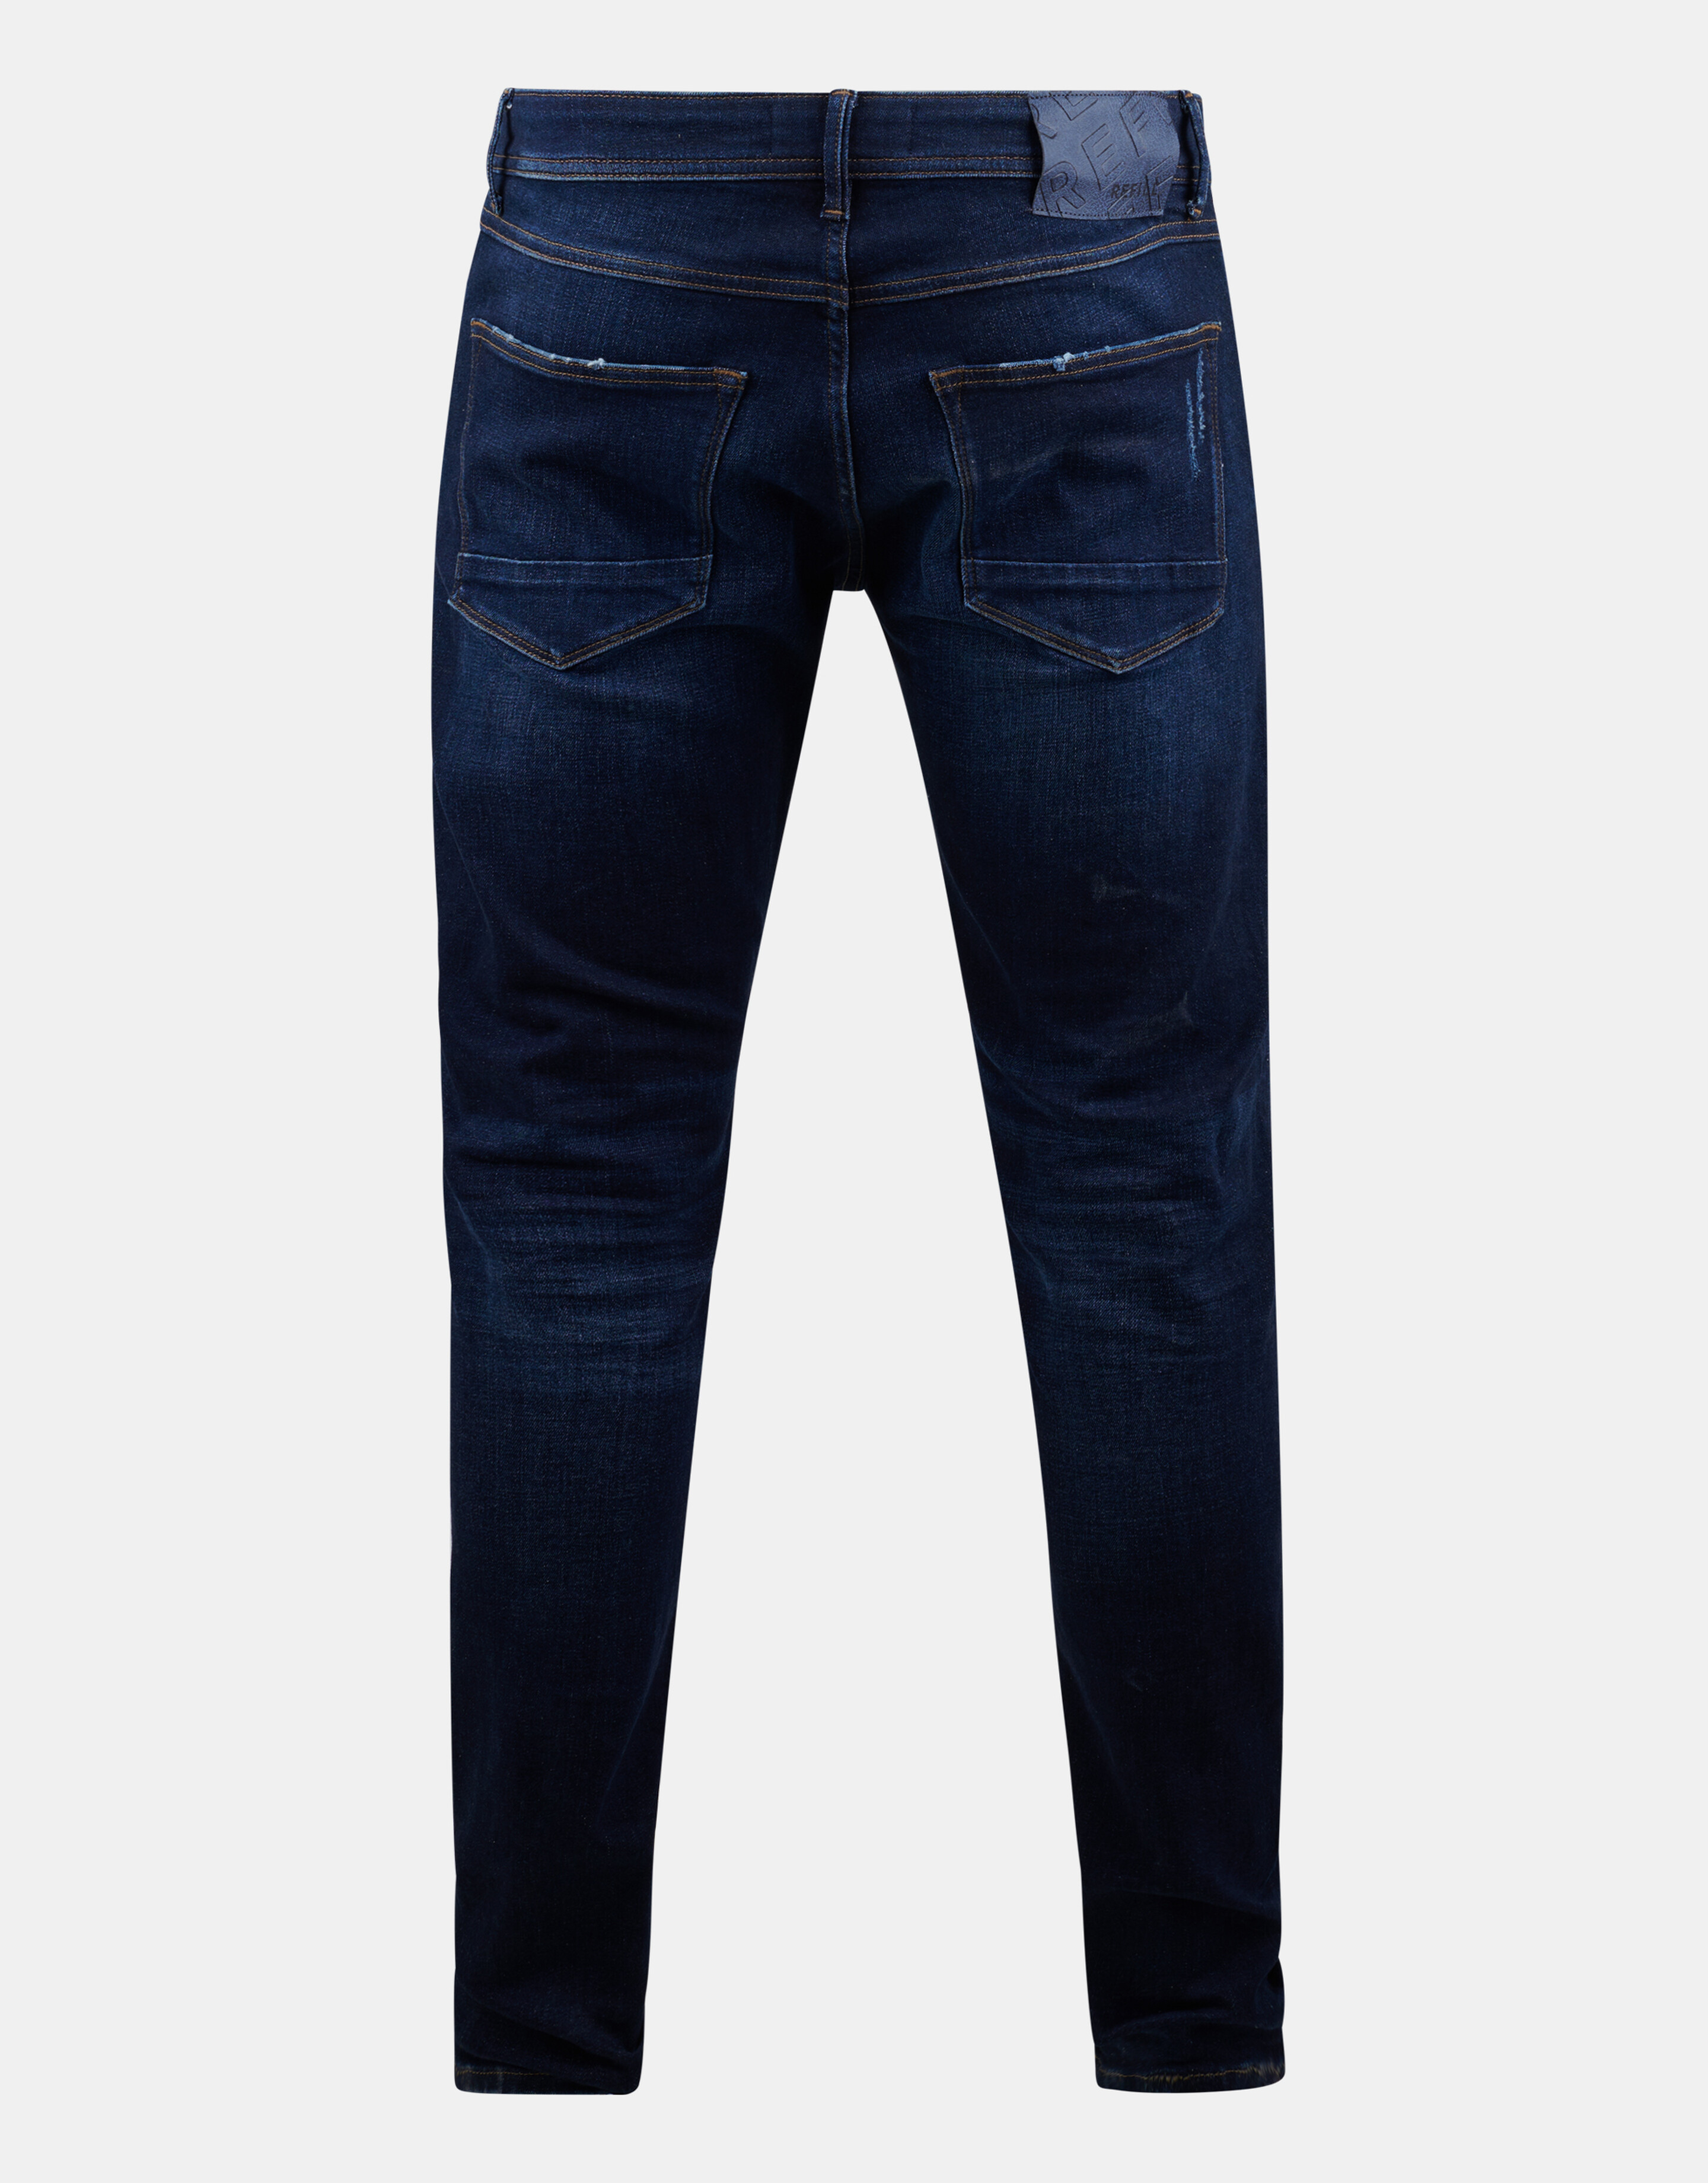 Leroy Skinny Hunter Jeans L34 Refill